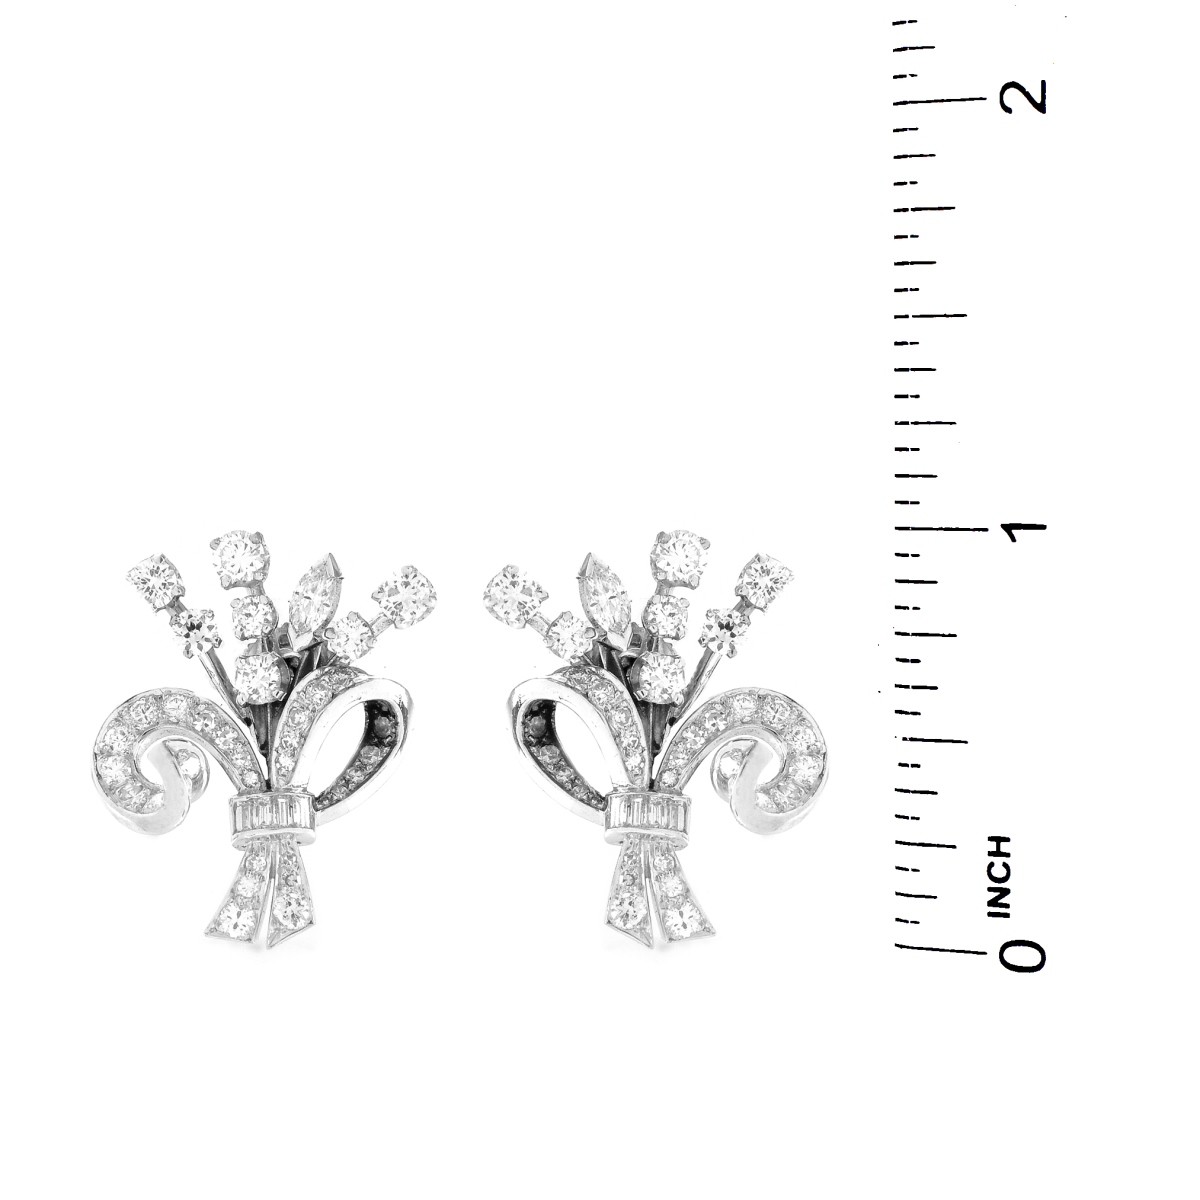 4.0ct TW Diamond and Platinum Earrings